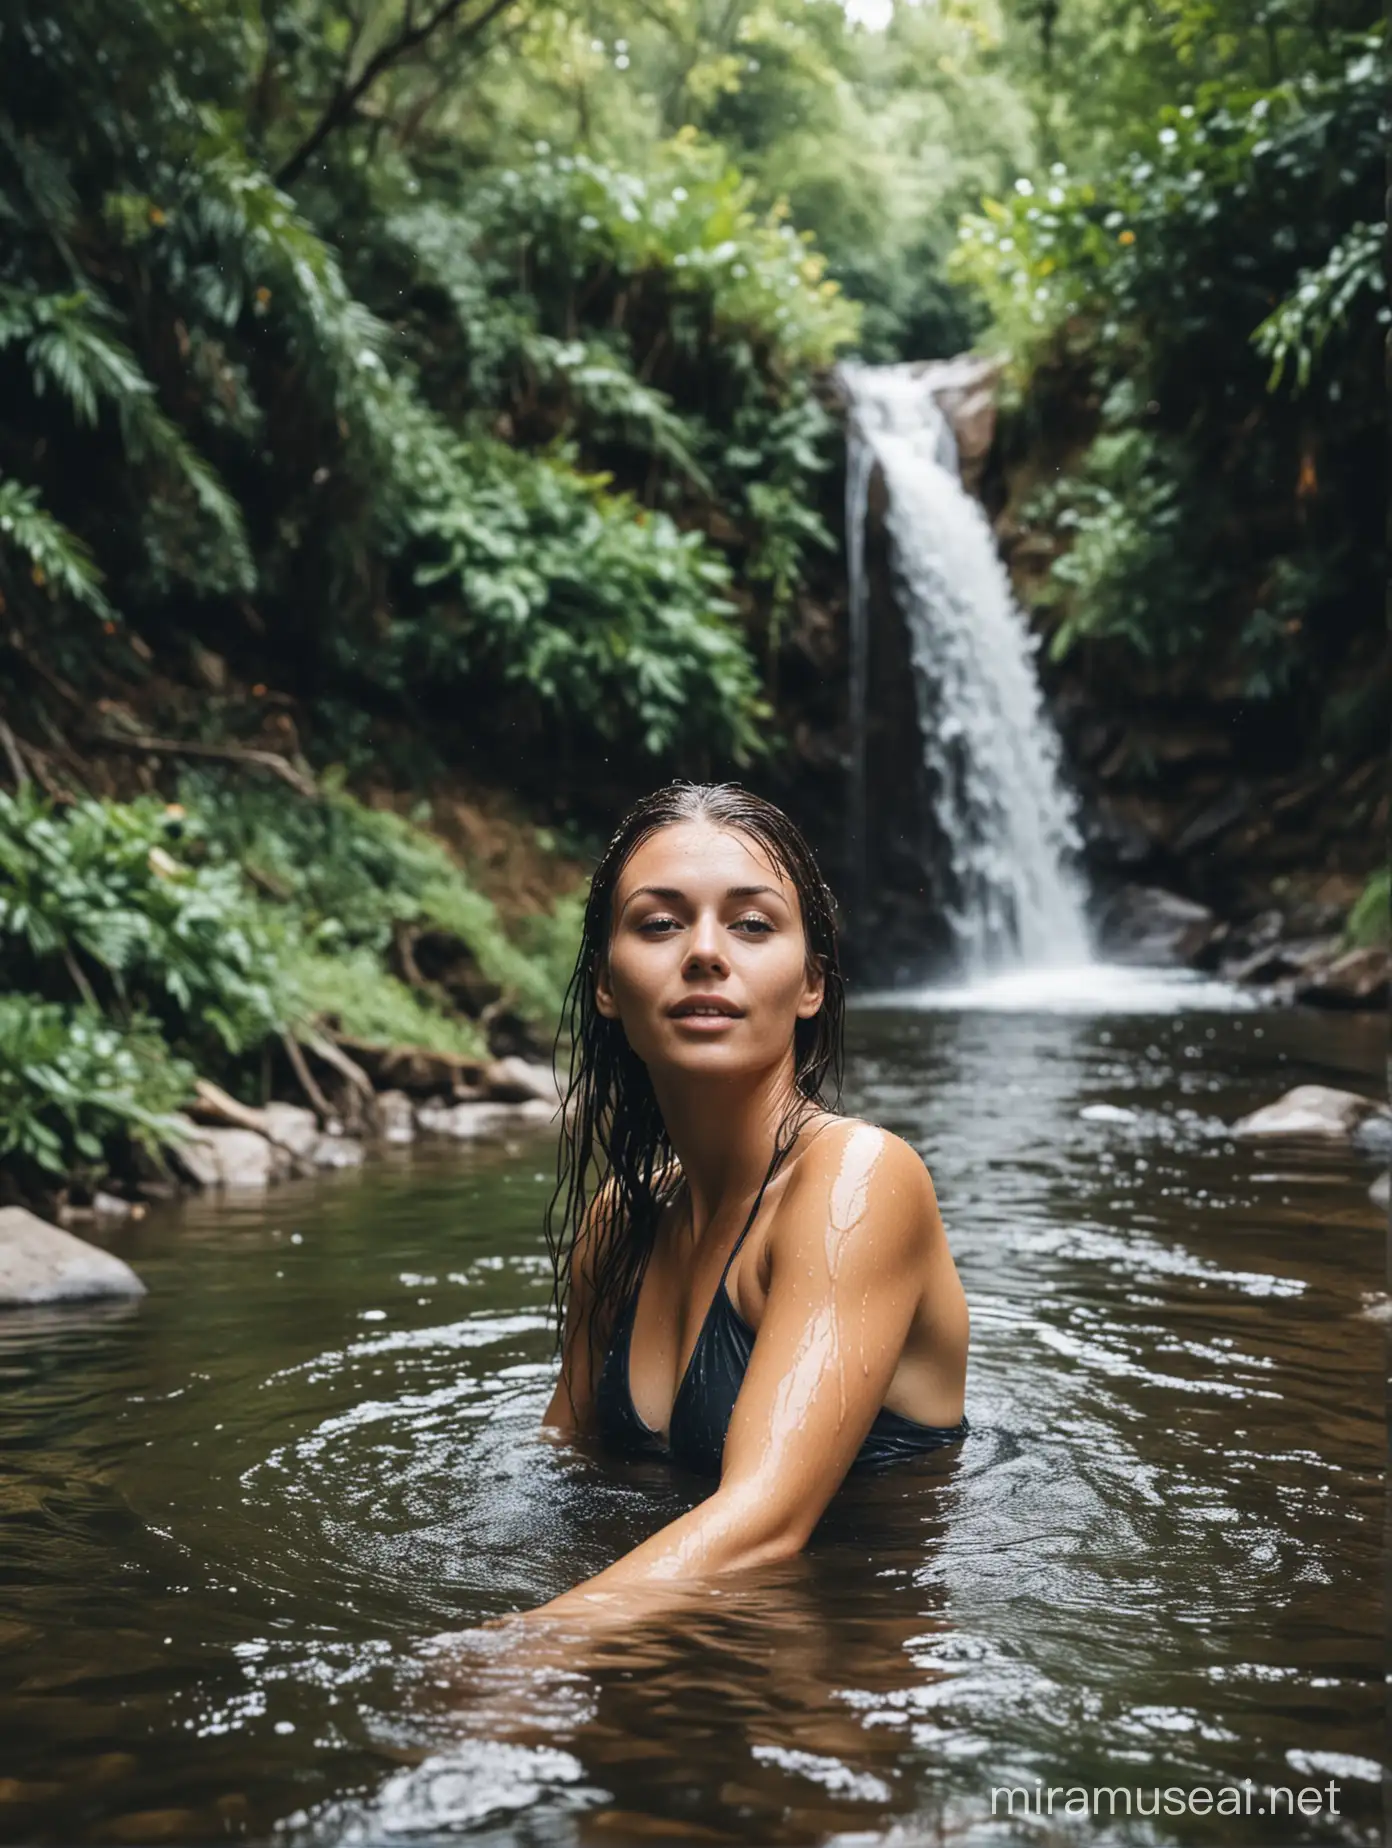 Woman Enjoying Nature While Swimming in Serene Creek with Waterfall